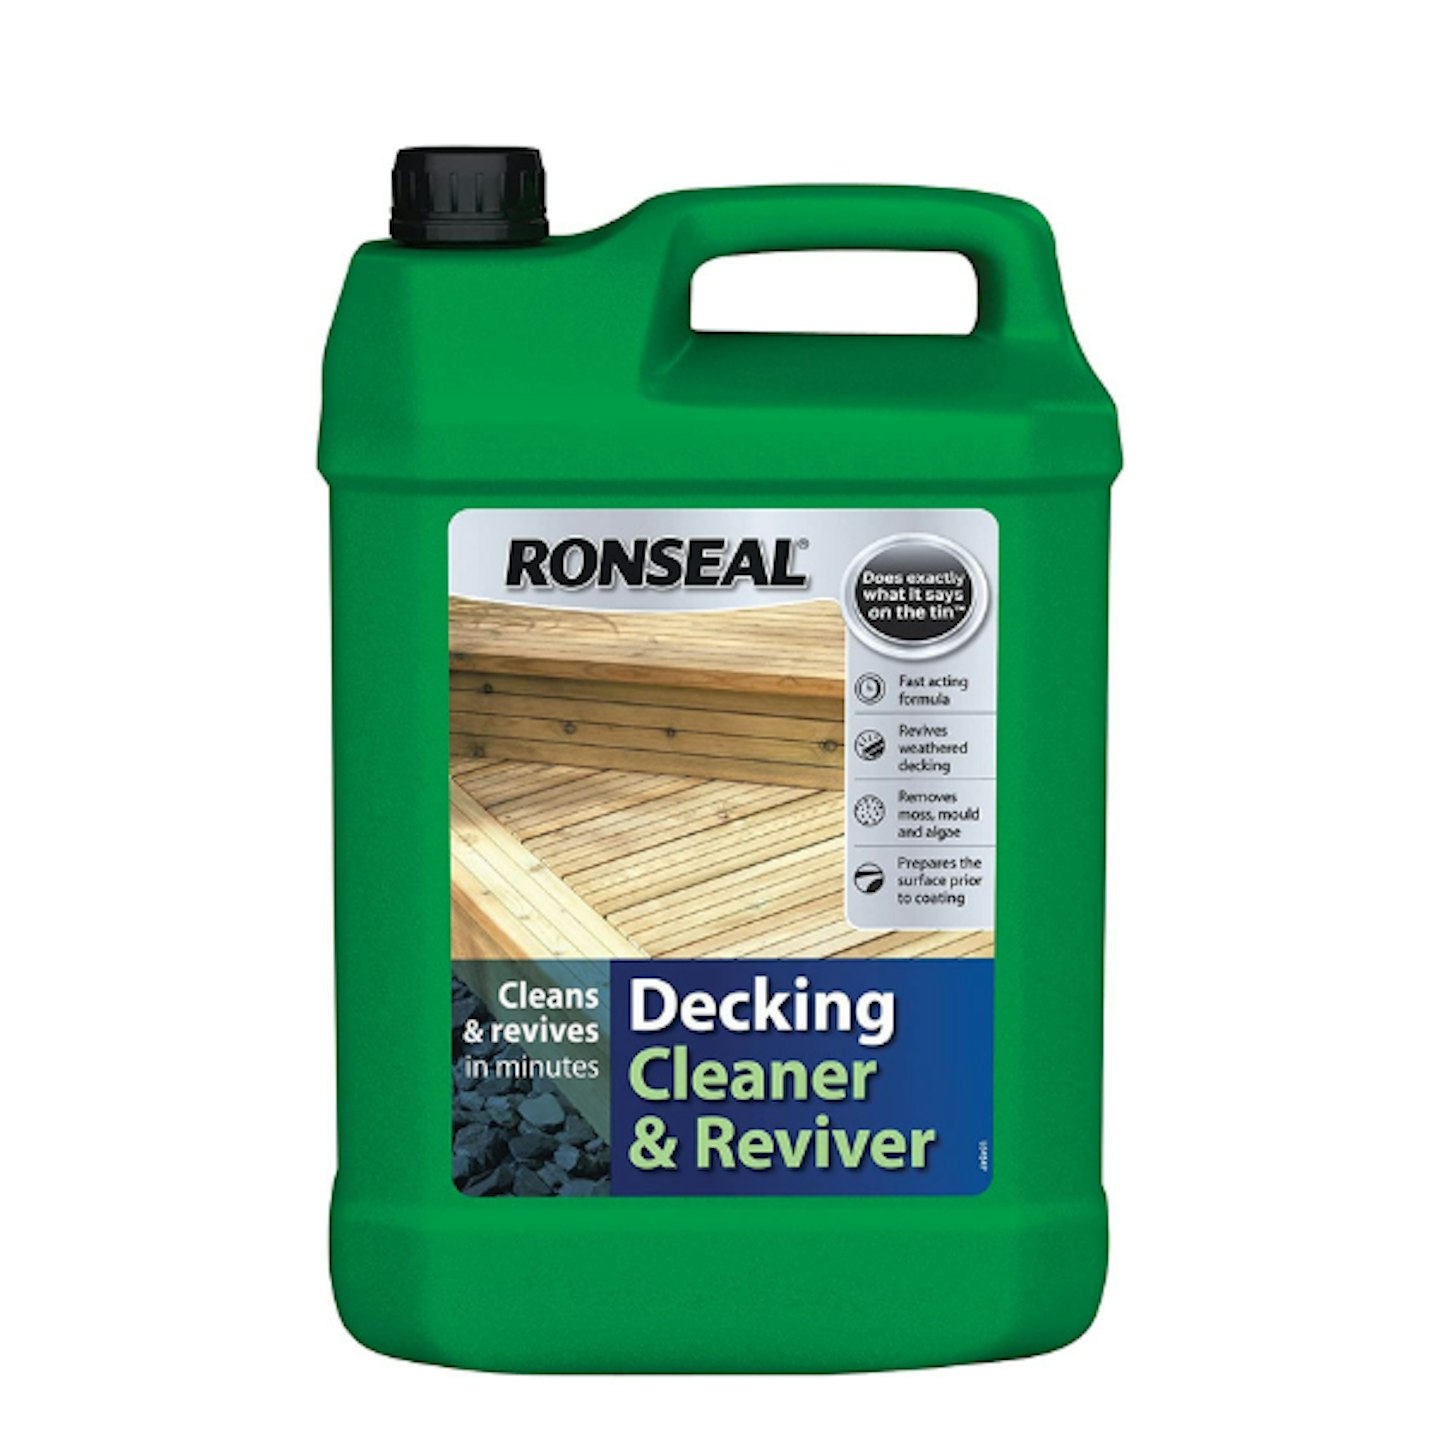 Ronseal DC Decking Cleaner 5 Litre